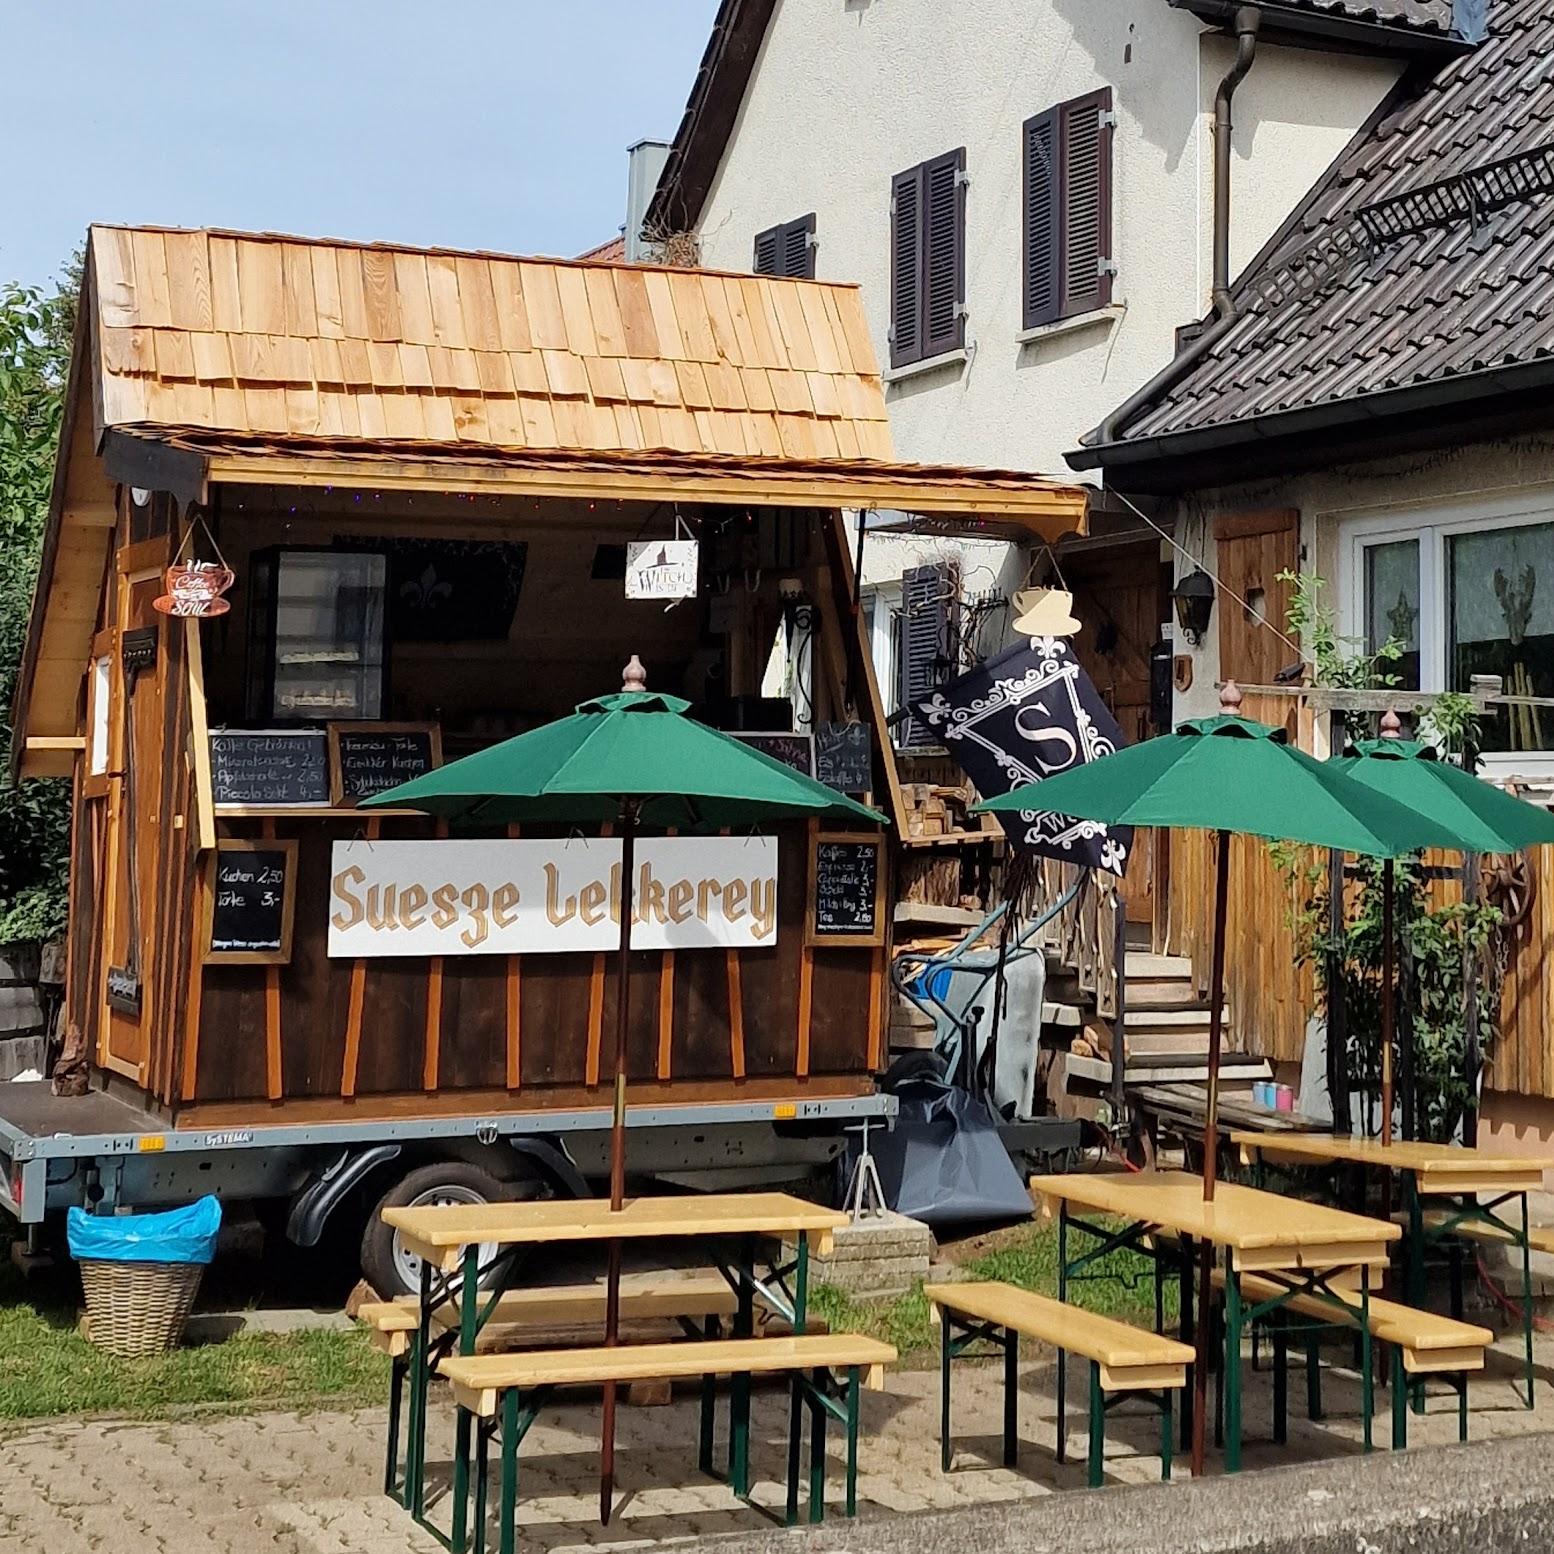 Restaurant "Café Suesze Lekkerey (Hexenhäuschen)" in Durchhausen